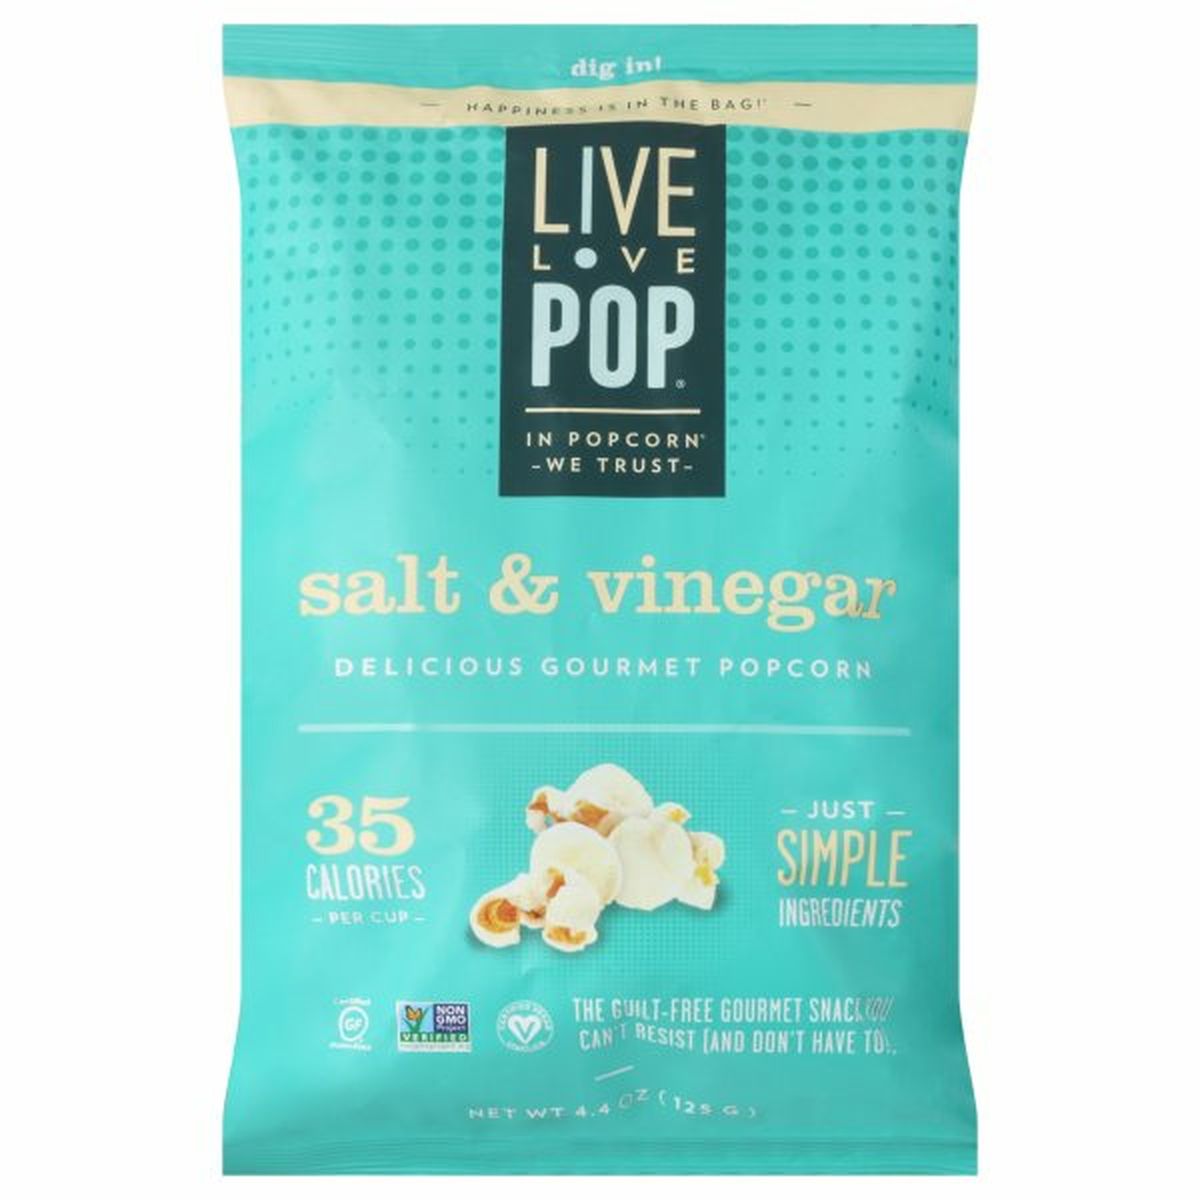 Calories in Live Love Pop Popcorn, Salt & Vinegar